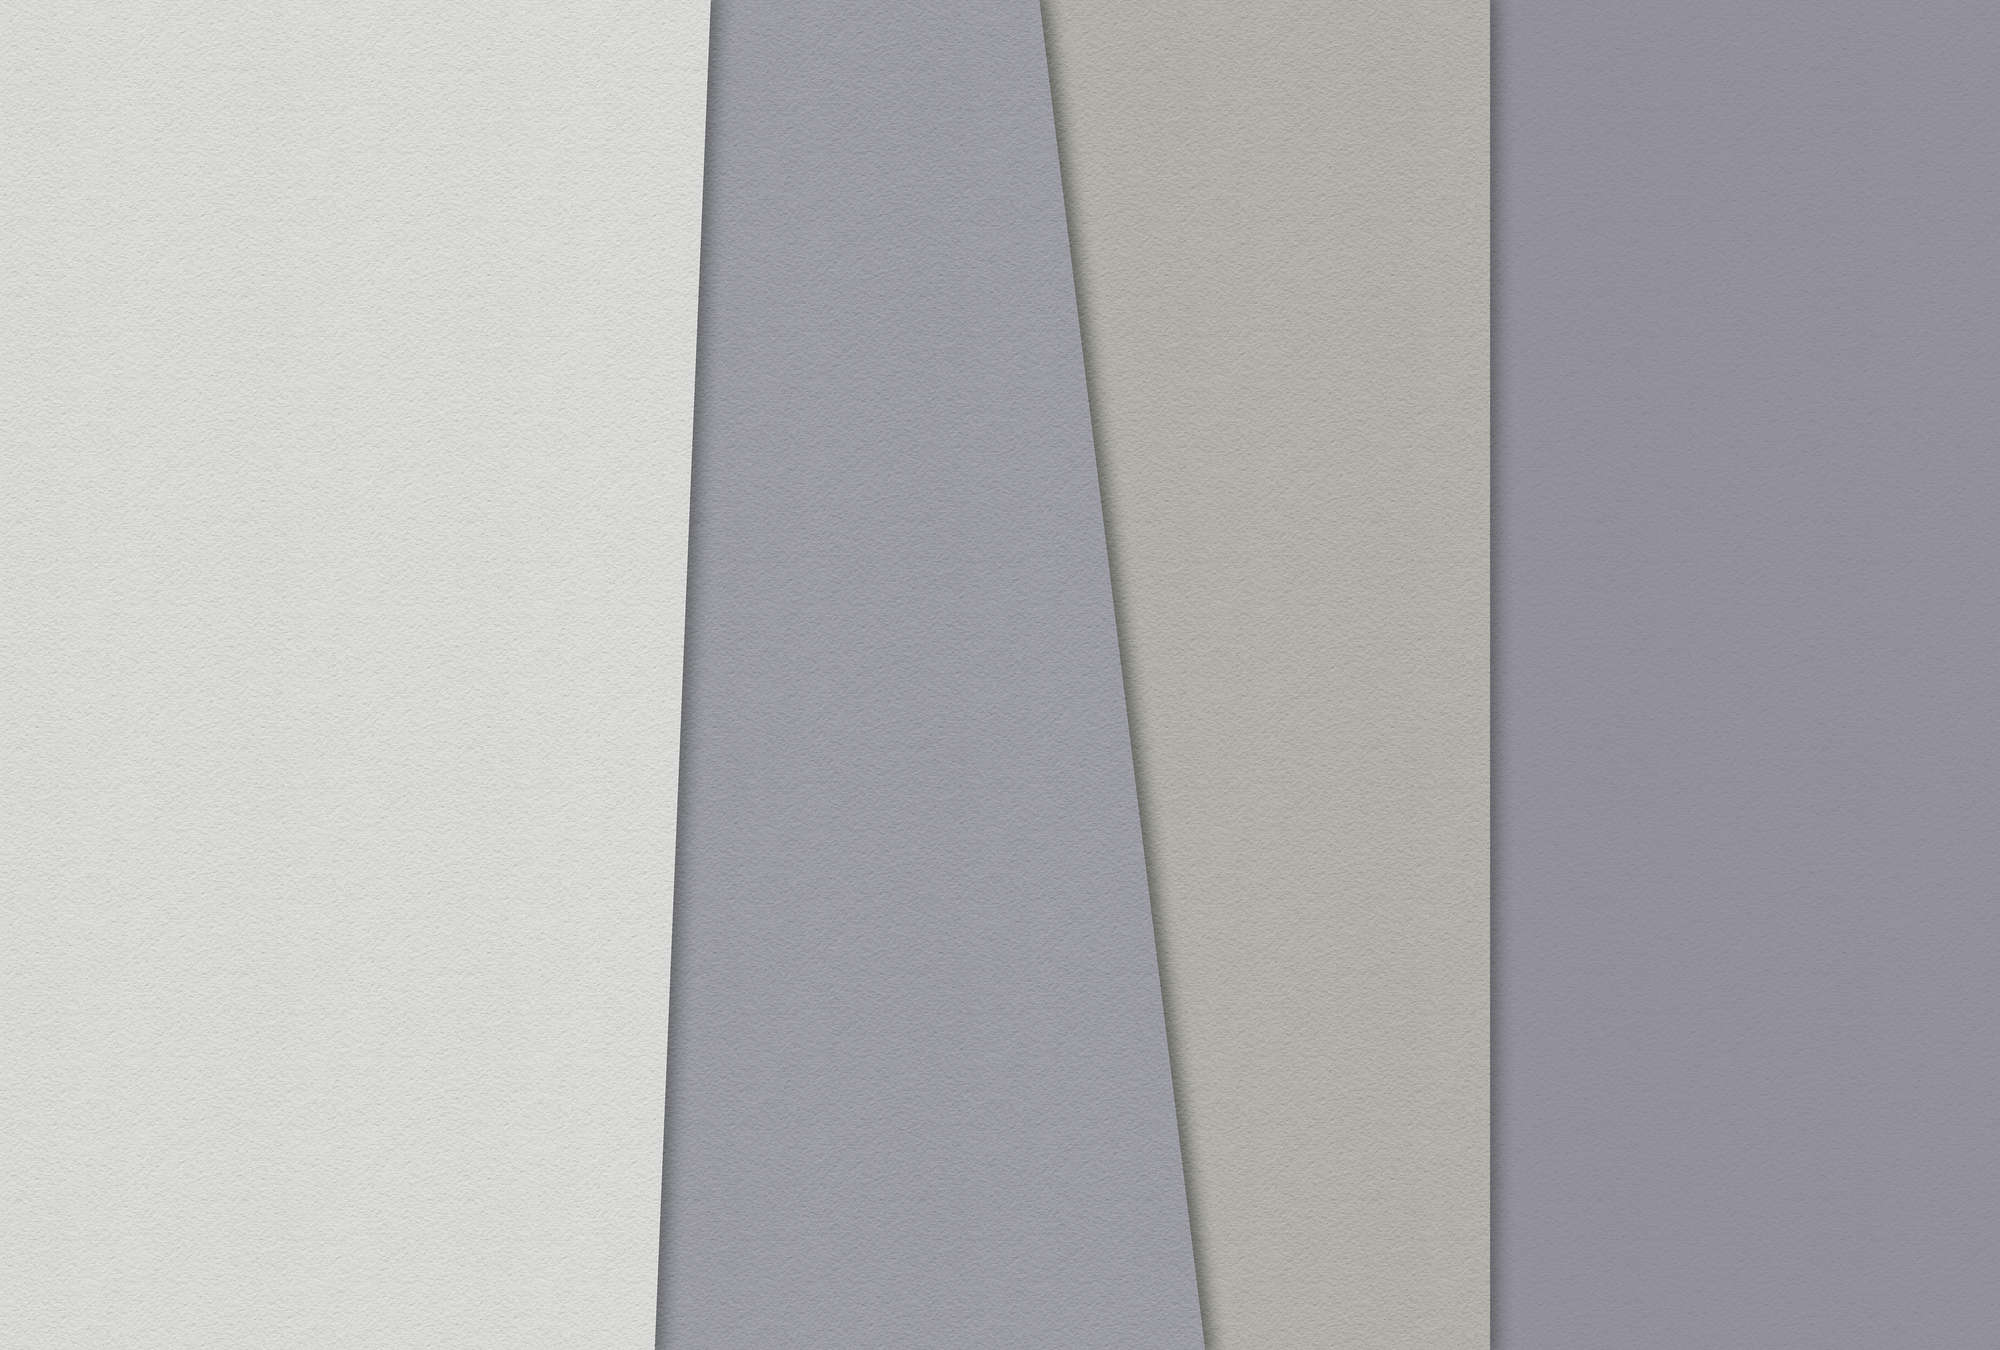             Layered paper 2 - Grafik Fototapete, Büttenpapier Struktur minimalistisches Design – Creme, Grün | Struktur Vlies
        